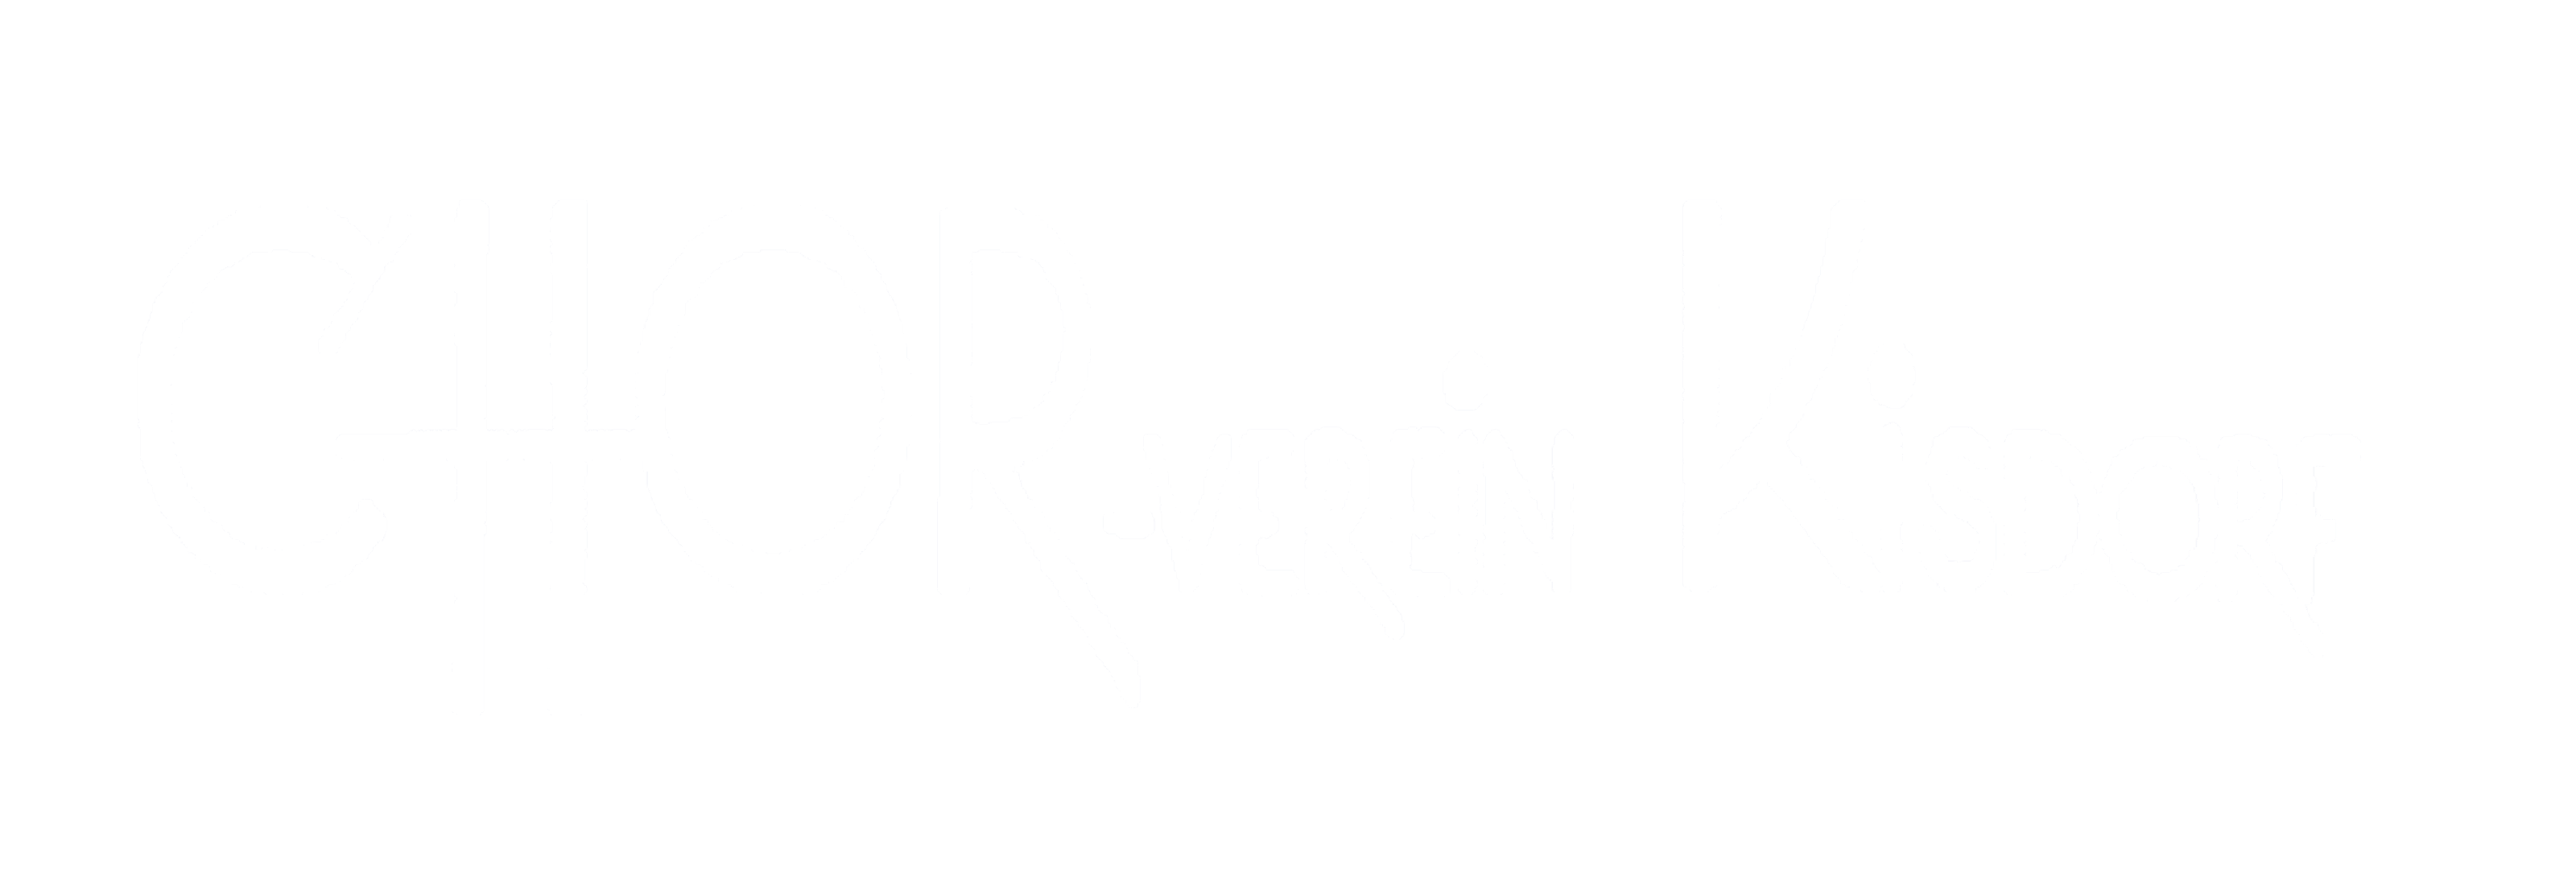 Chor-Verein Kisdorf